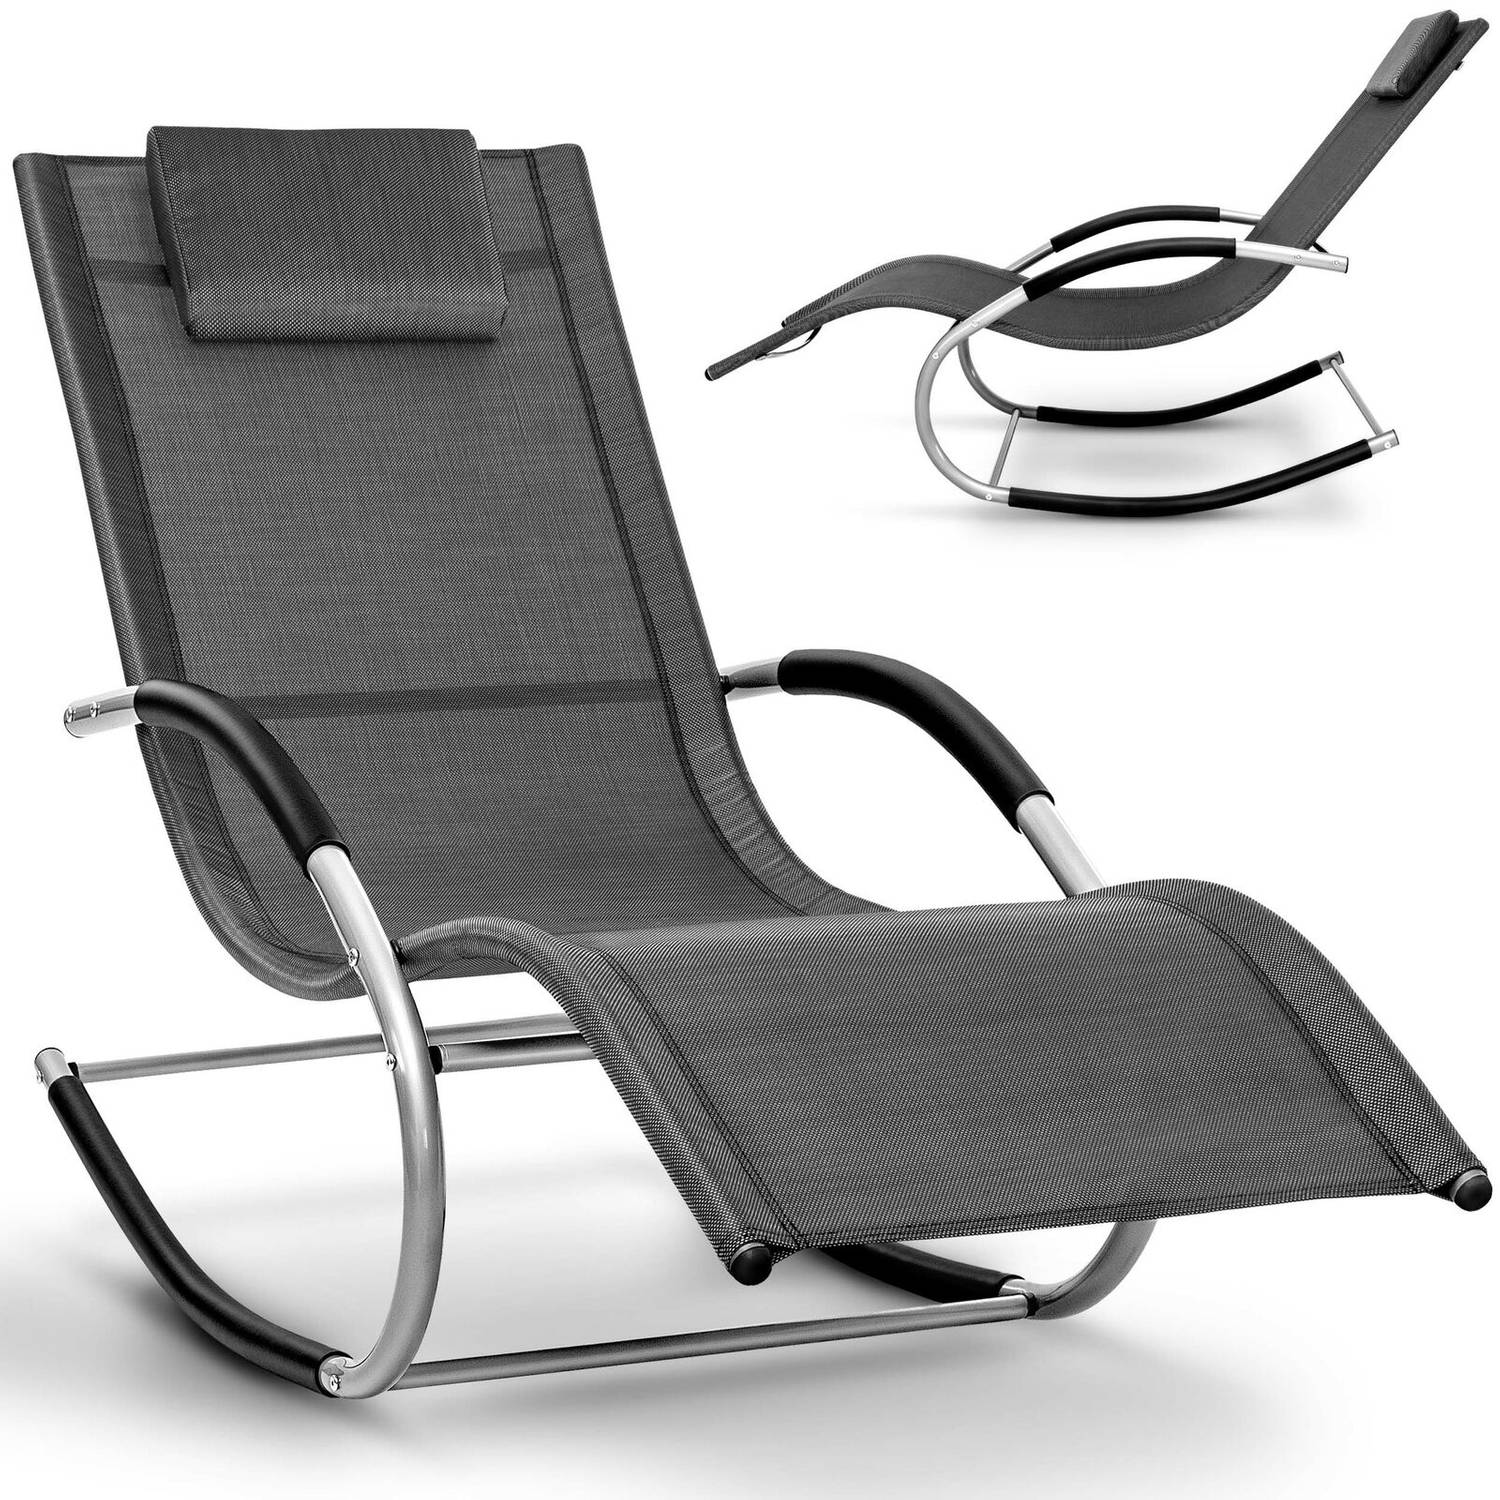 Oude man salami Verdeelstuk Tillvex- schommelstoel antraciet-tuin ligstoel- relax ligstoel- ligstoel  schommel- ligstoel camping | Blokker